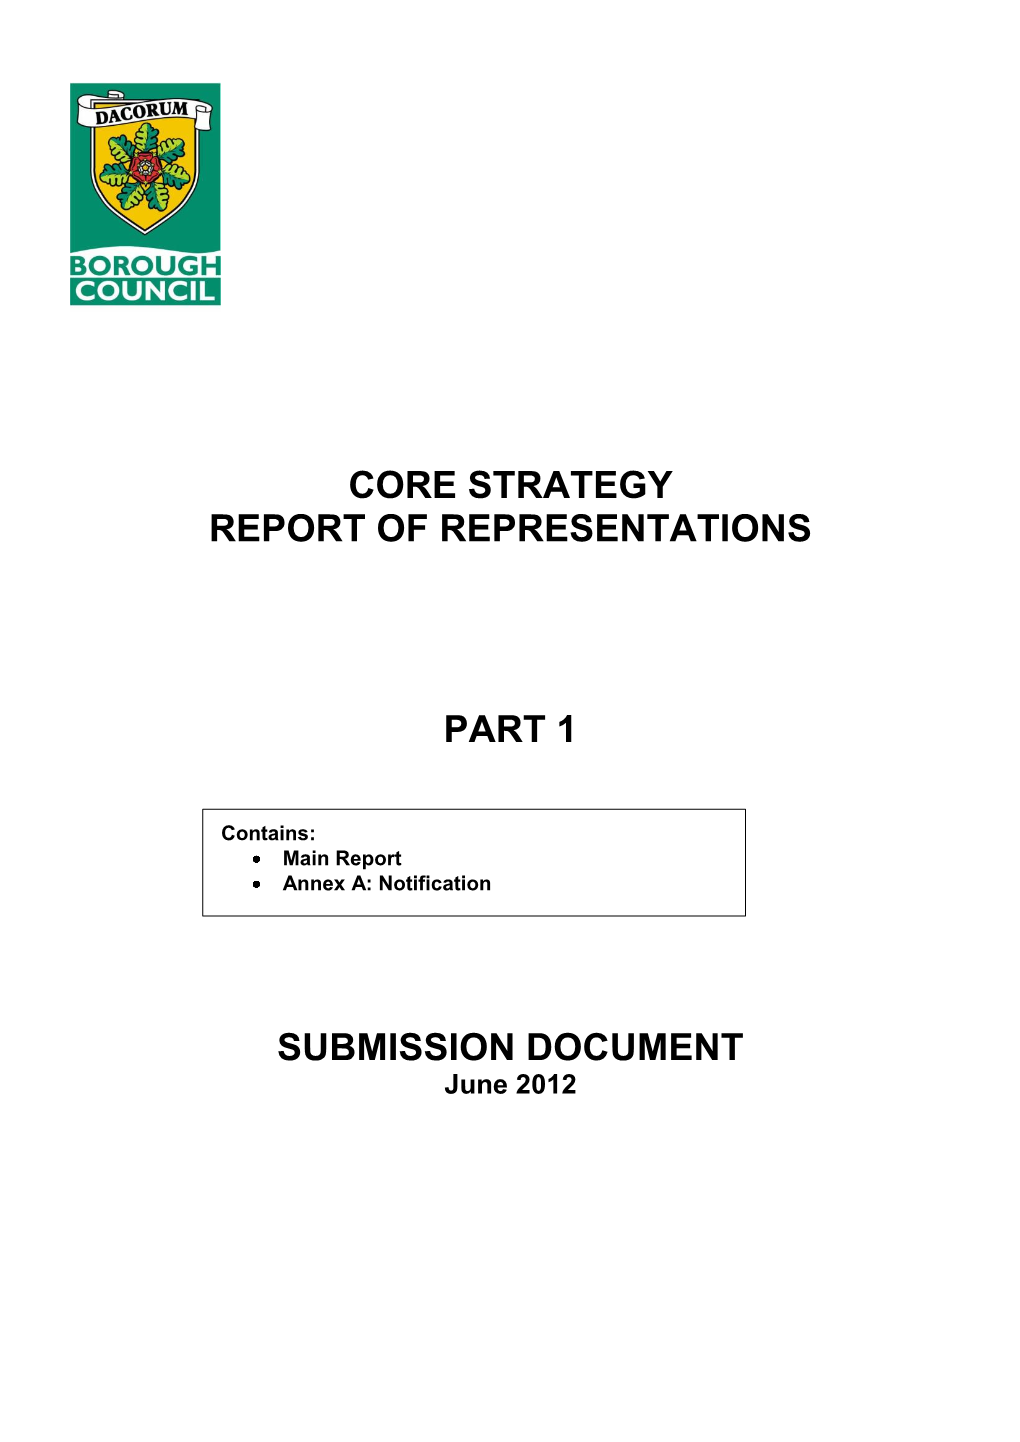 Report of Representations